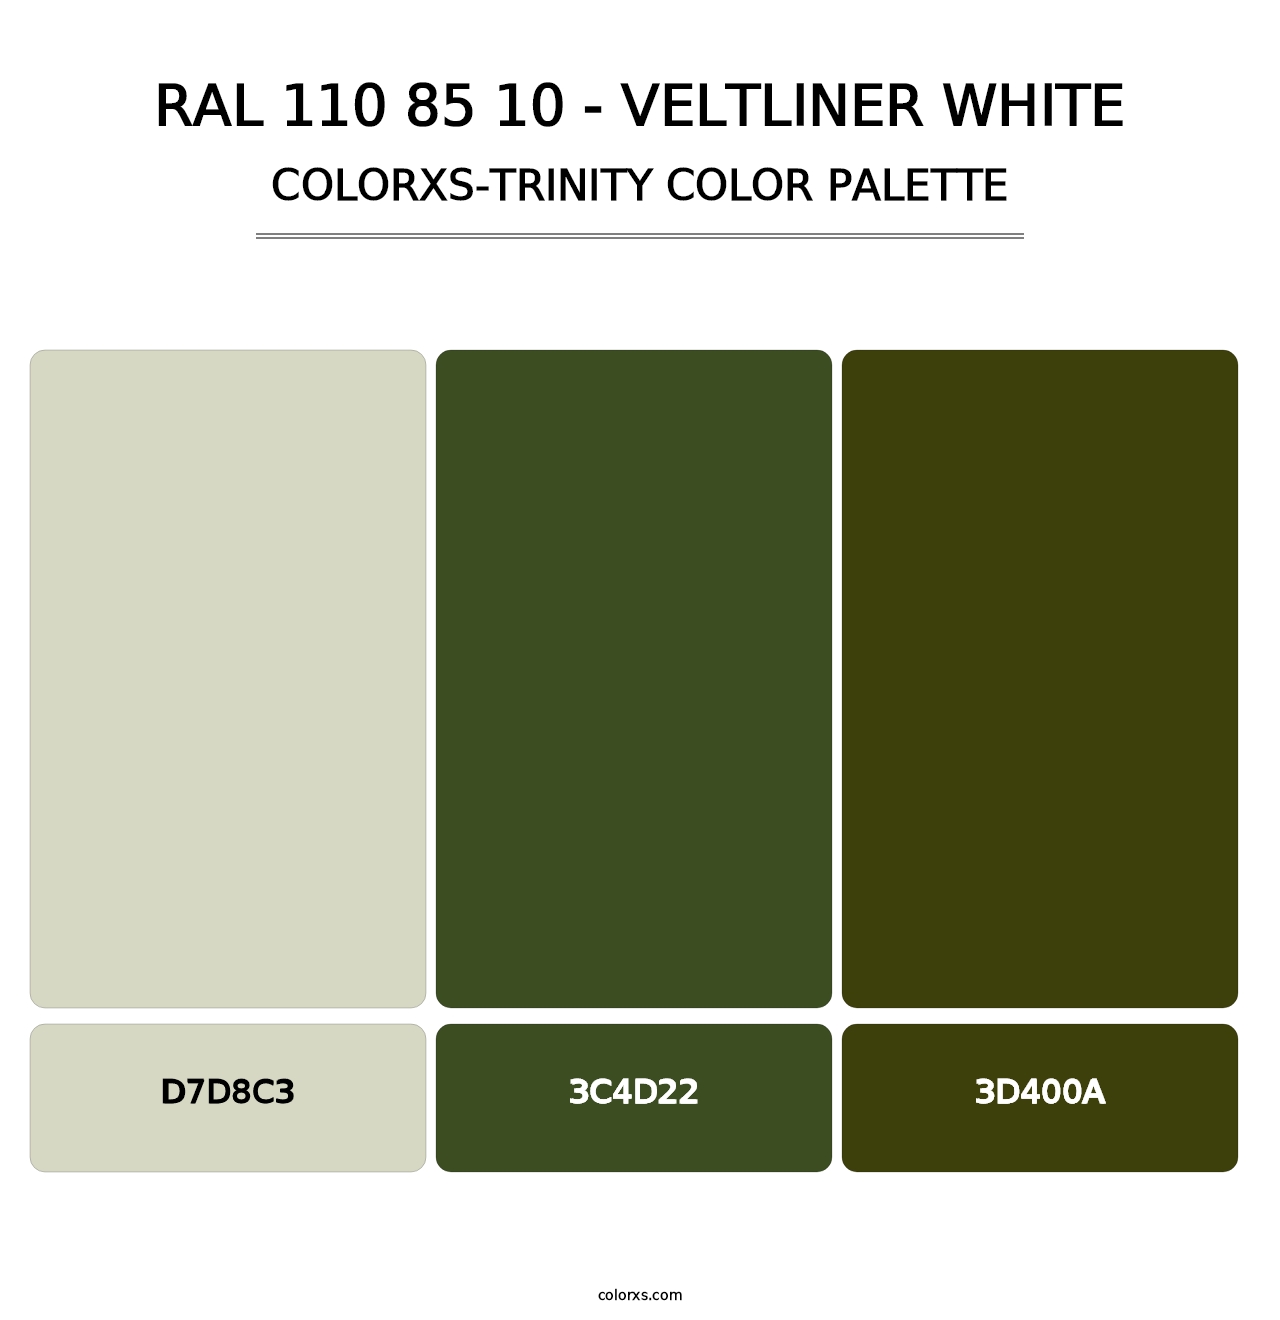 RAL 110 85 10 - Veltliner White - Colorxs Trinity Palette